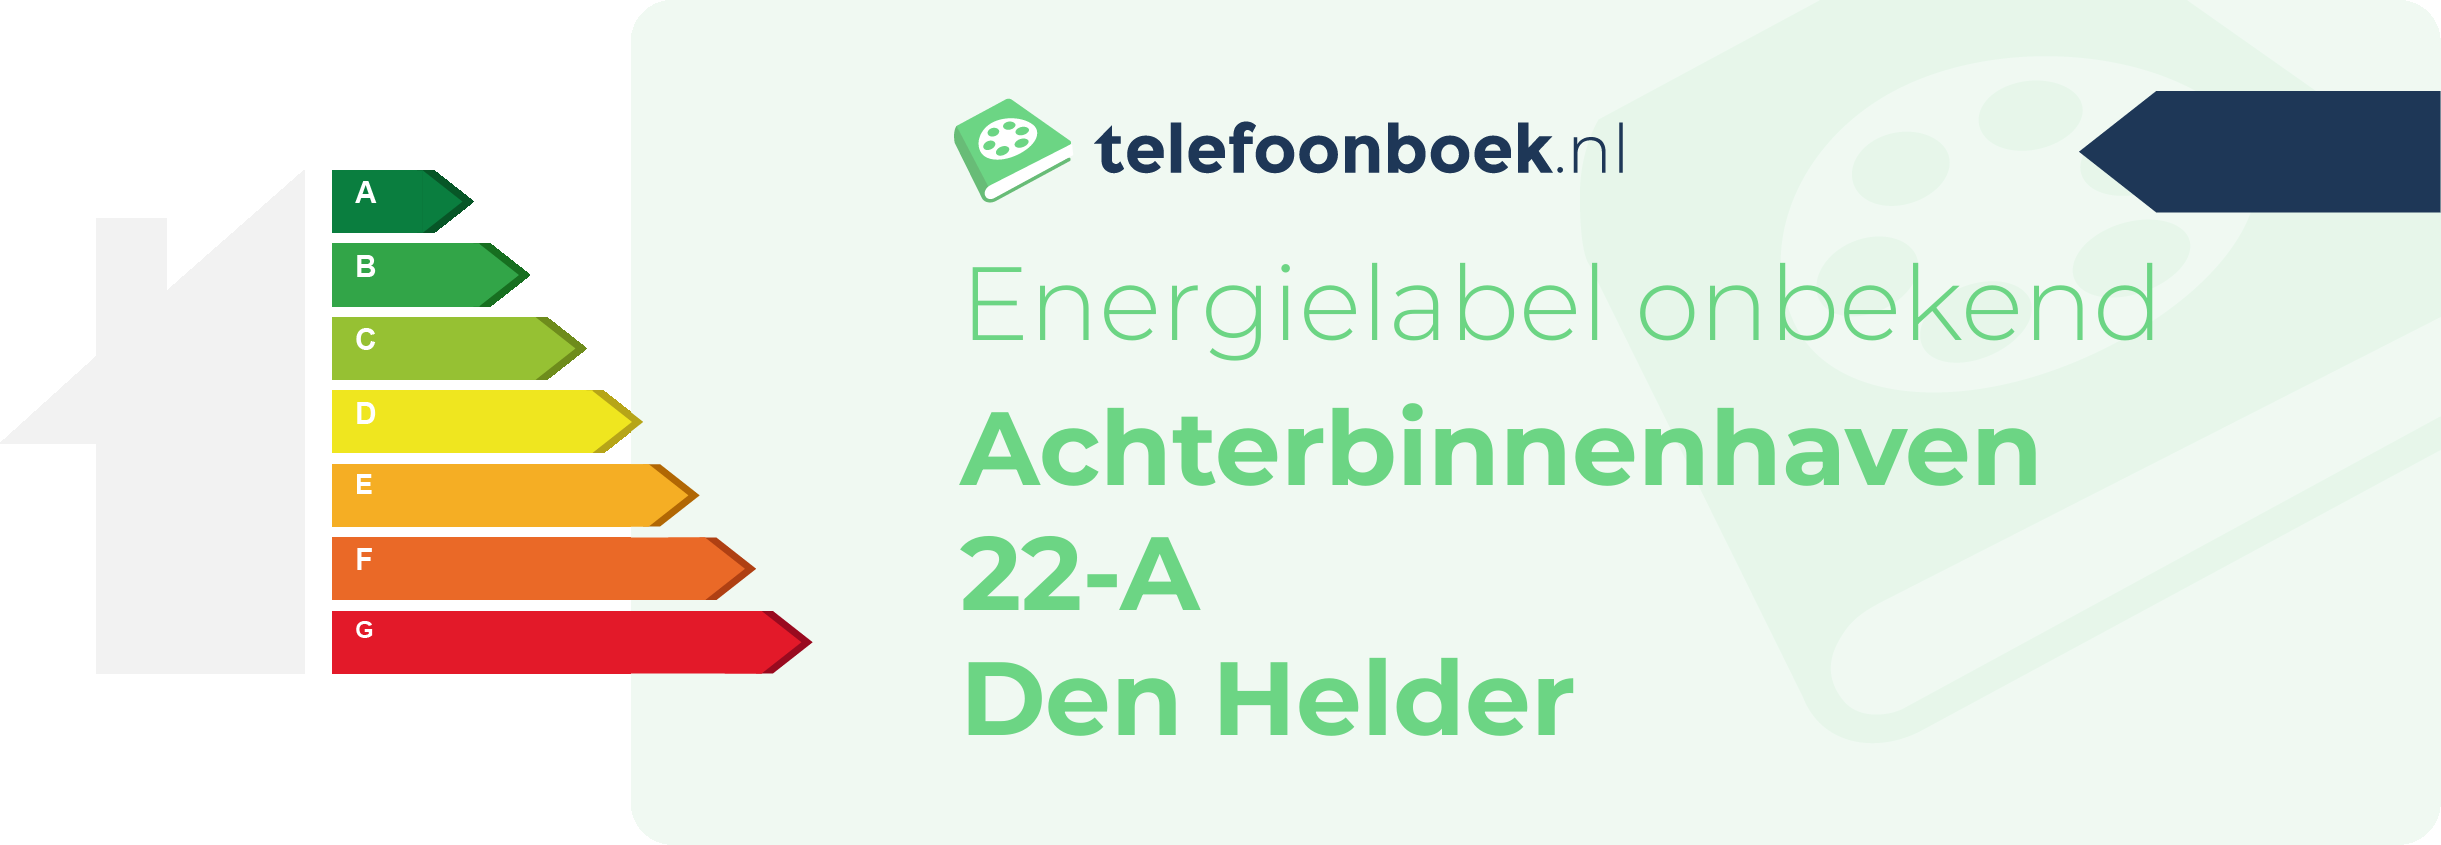 Energielabel Achterbinnenhaven 22-A Den Helder